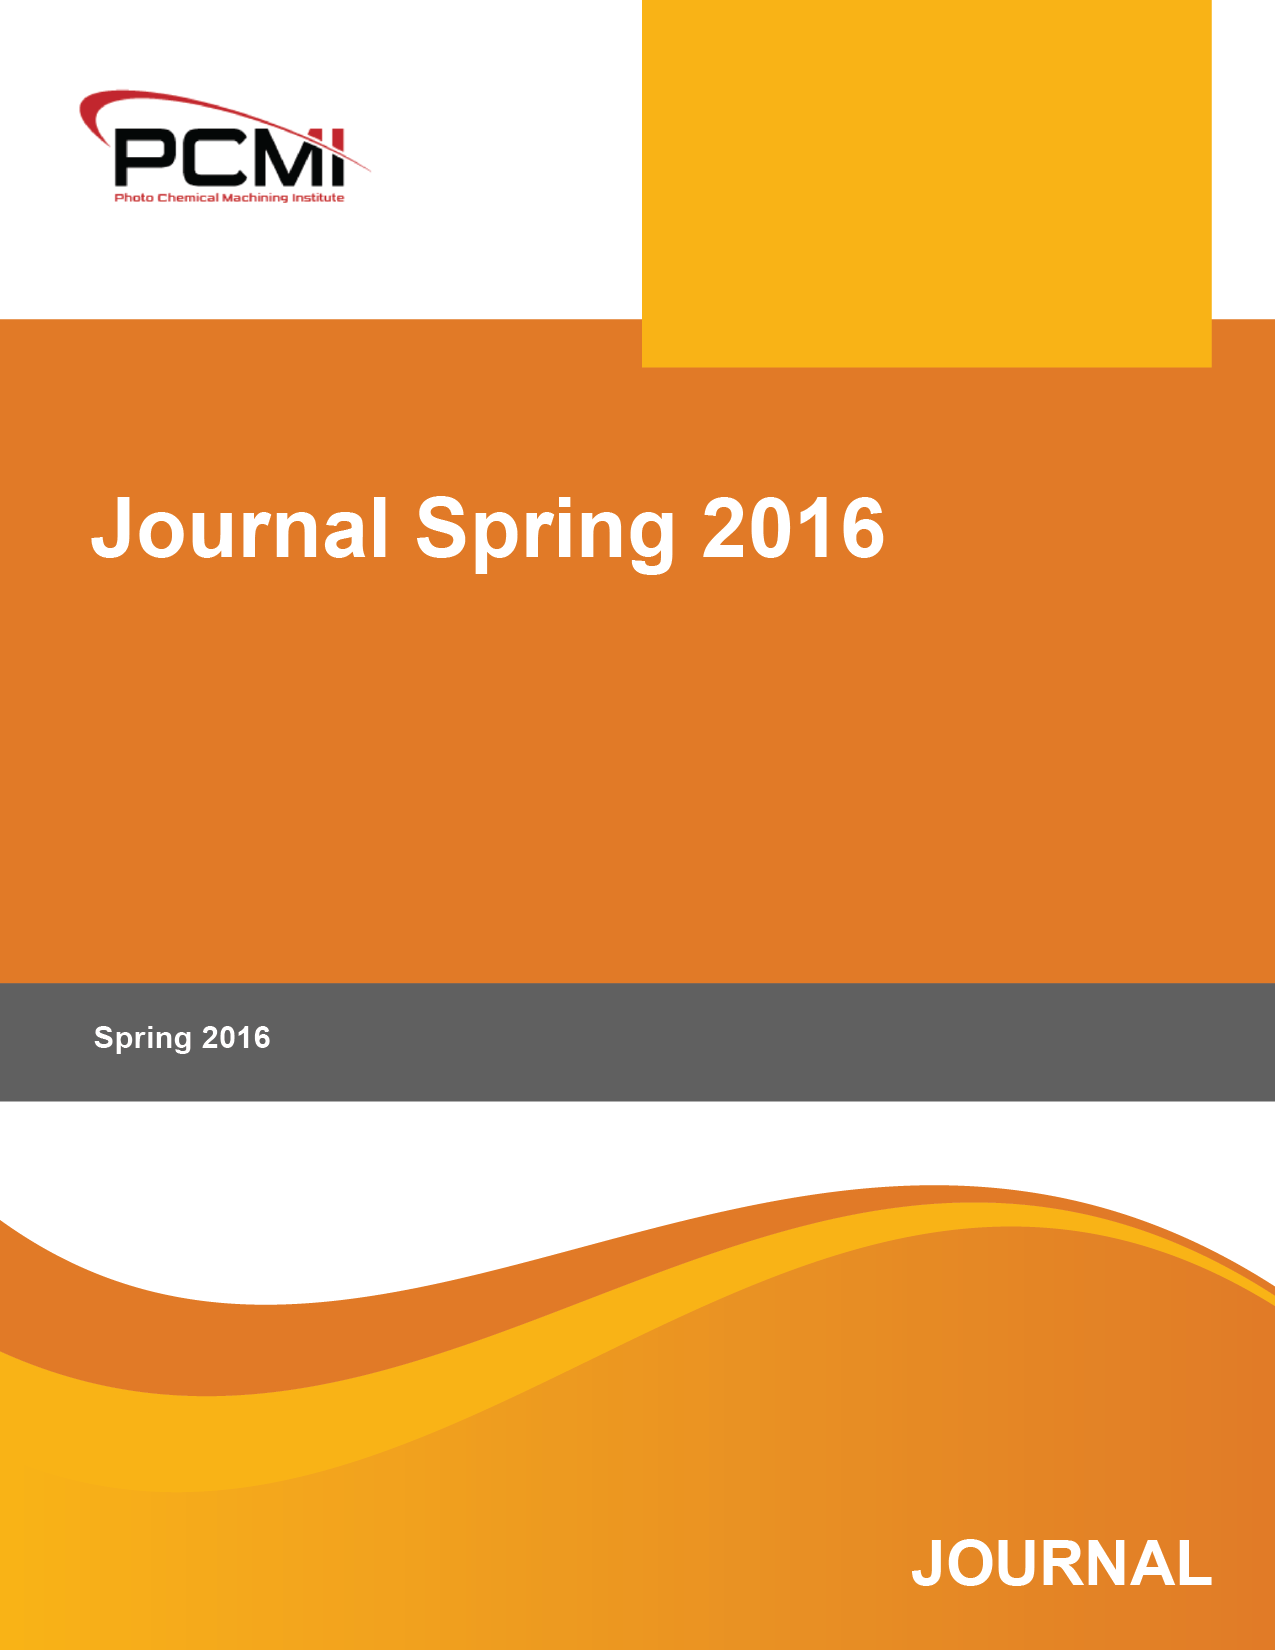 2016 Spring Journal